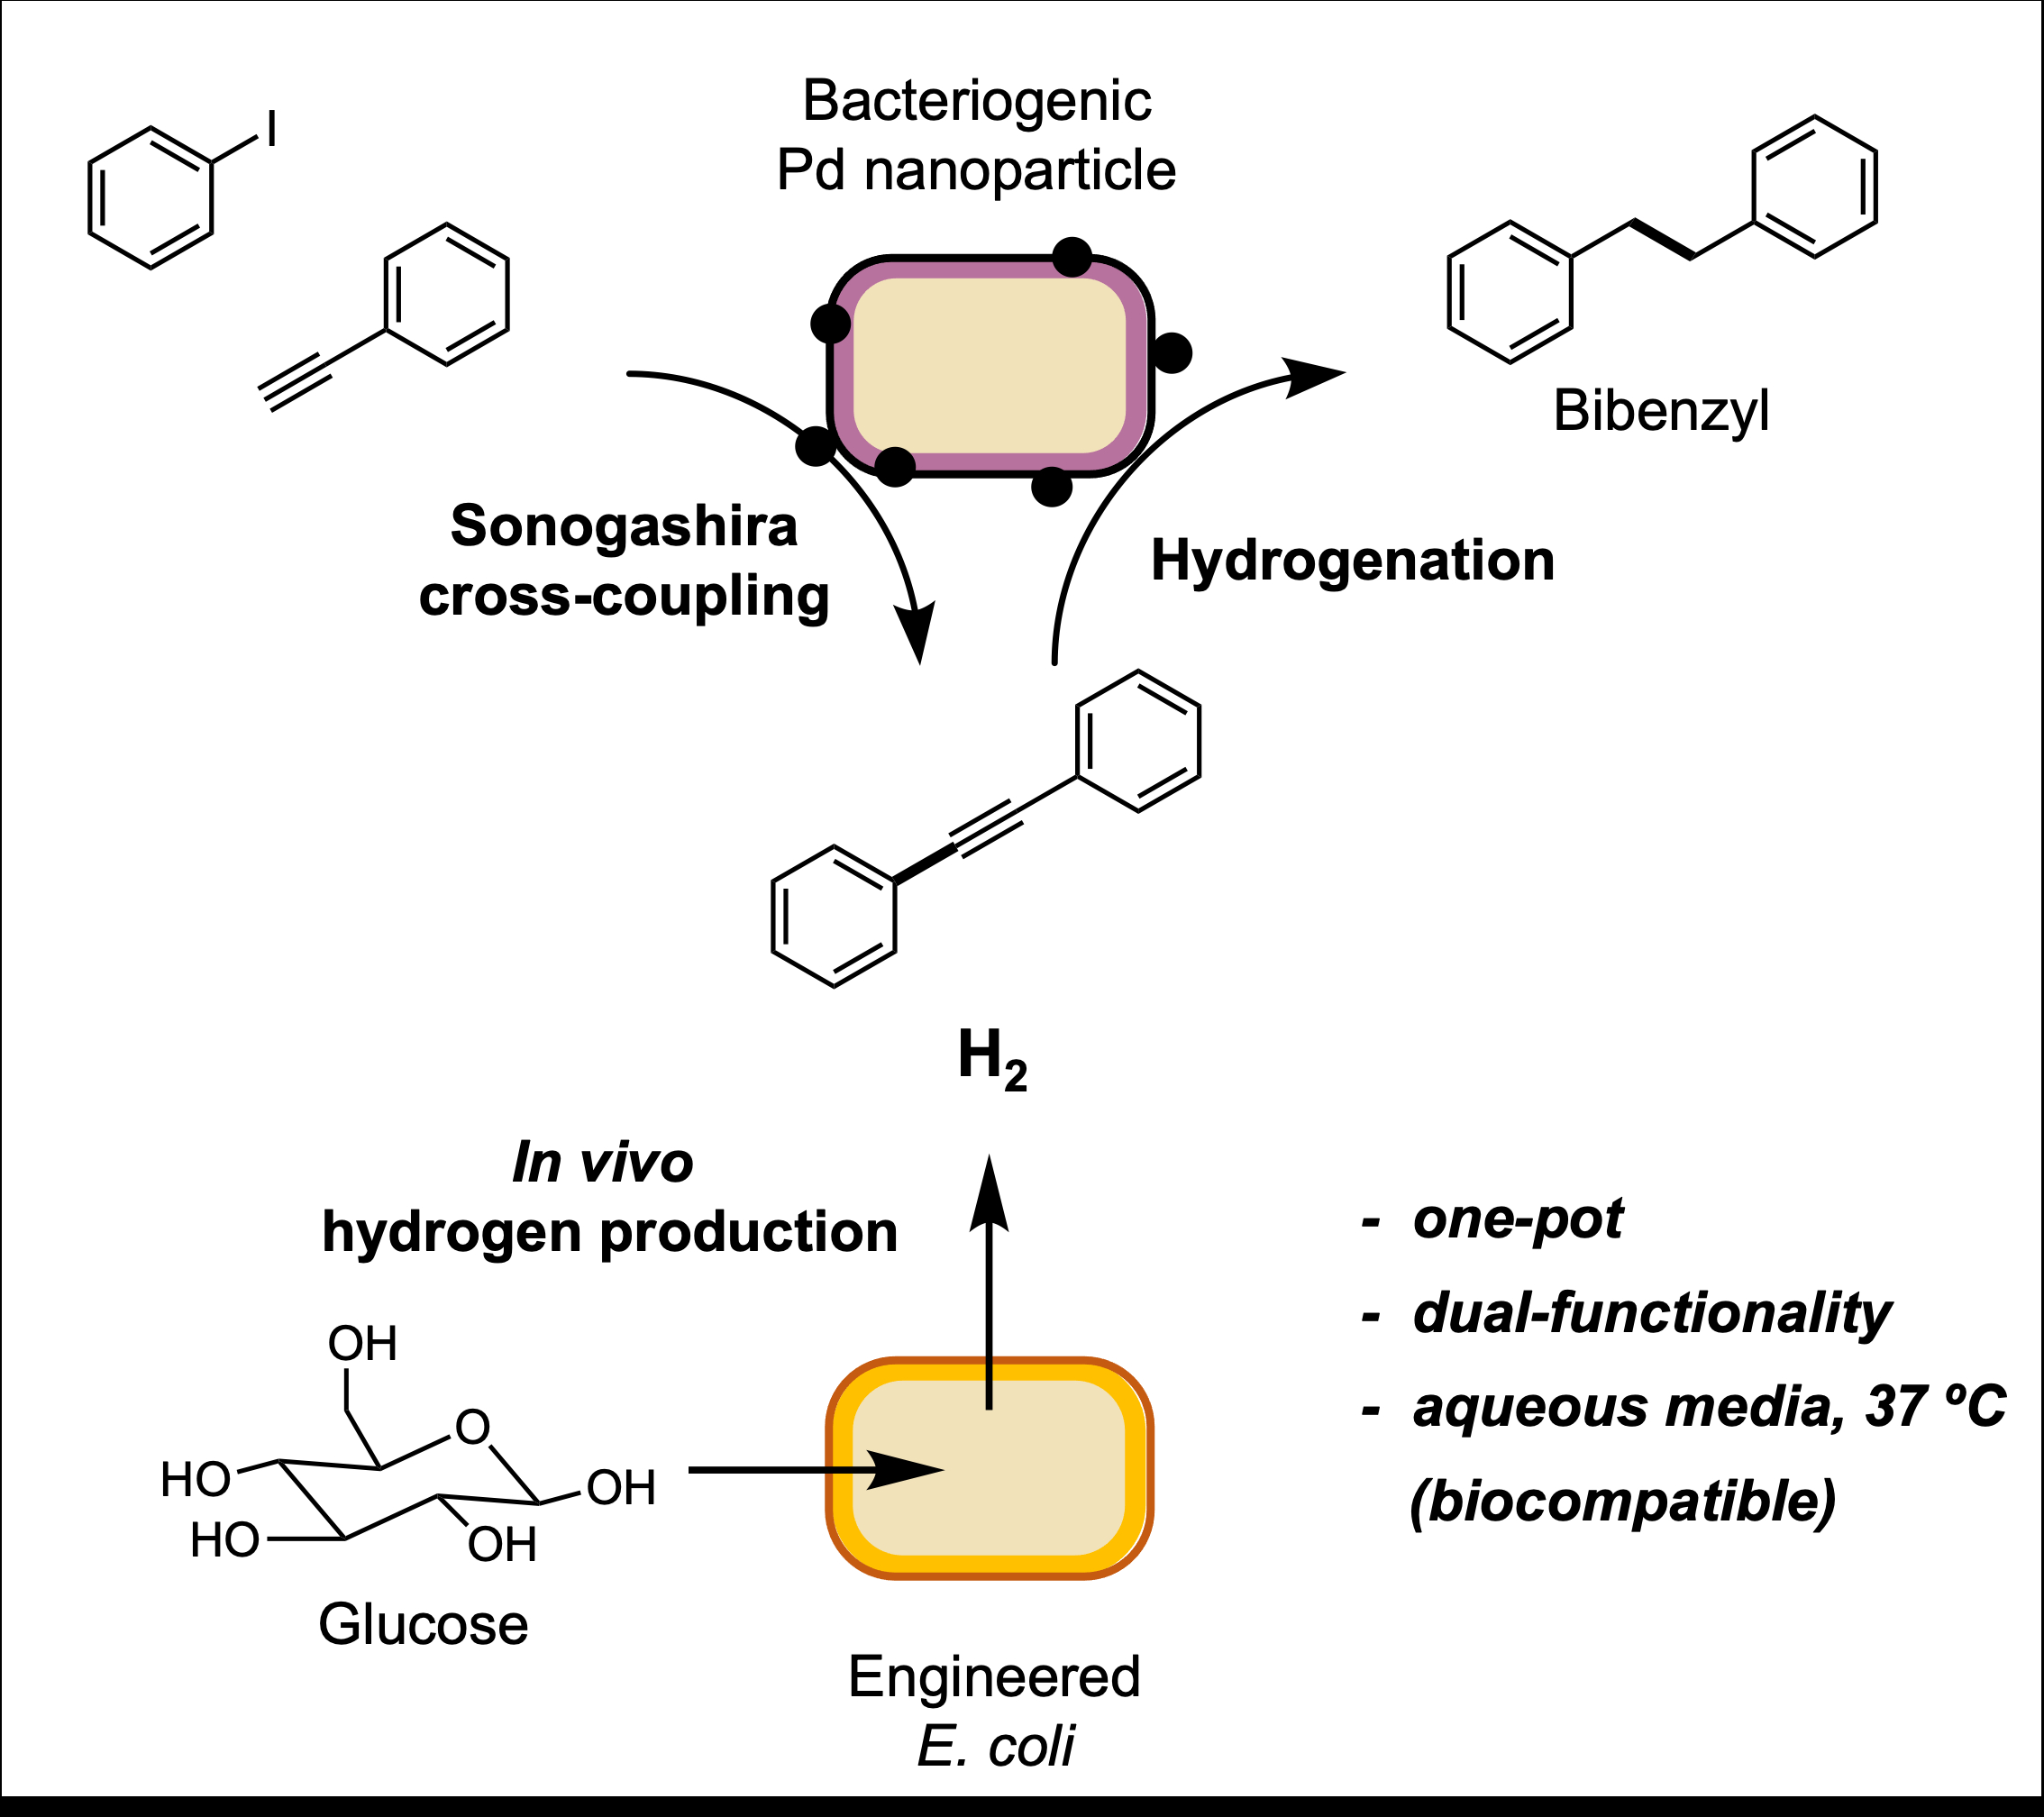 Biocompatible one-pot cross-coupling/hydrogenation tandem reactions